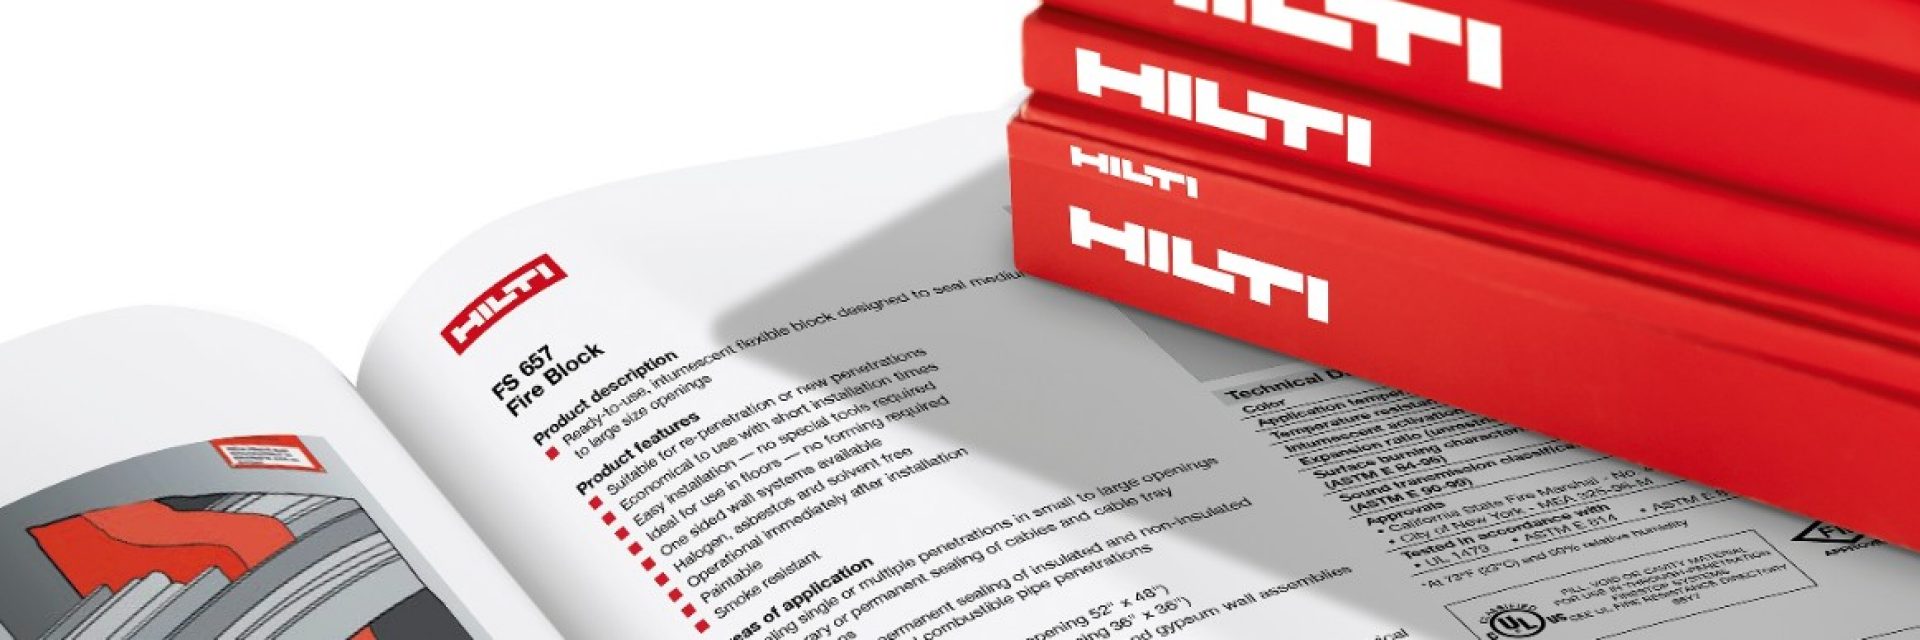 Hilti technical literature for fire protection